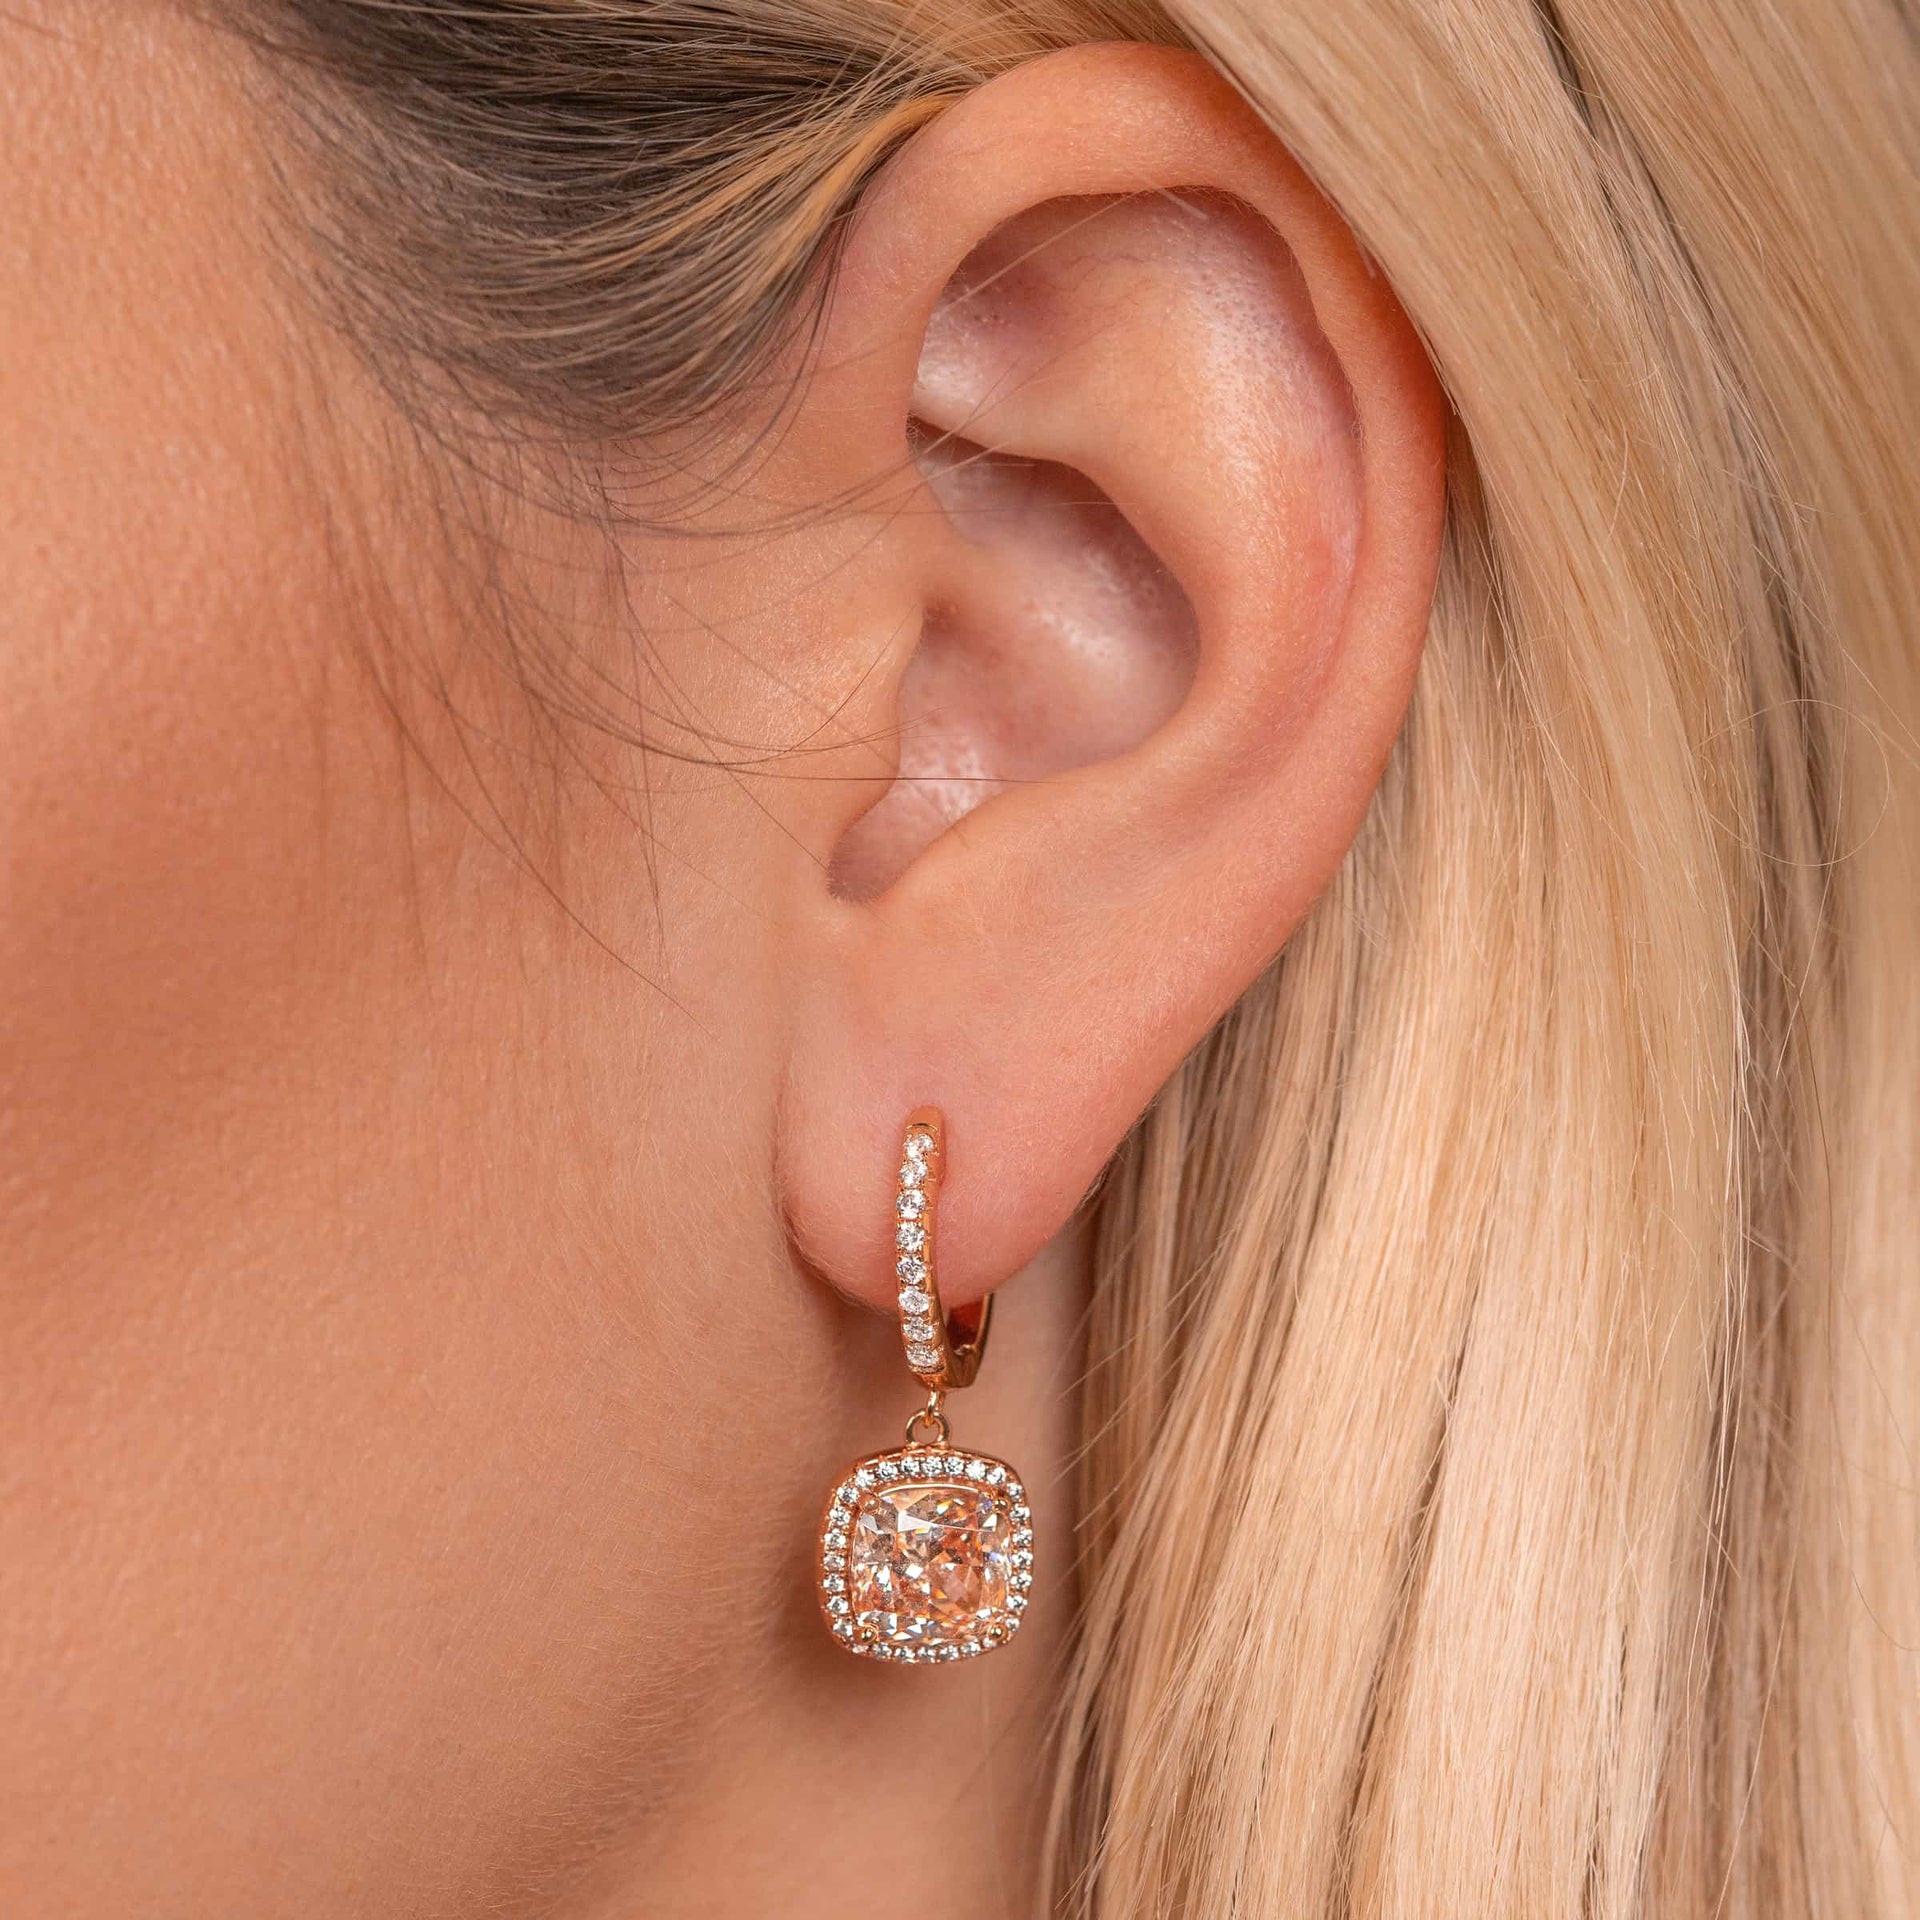 Rose gold cushion cut earrings